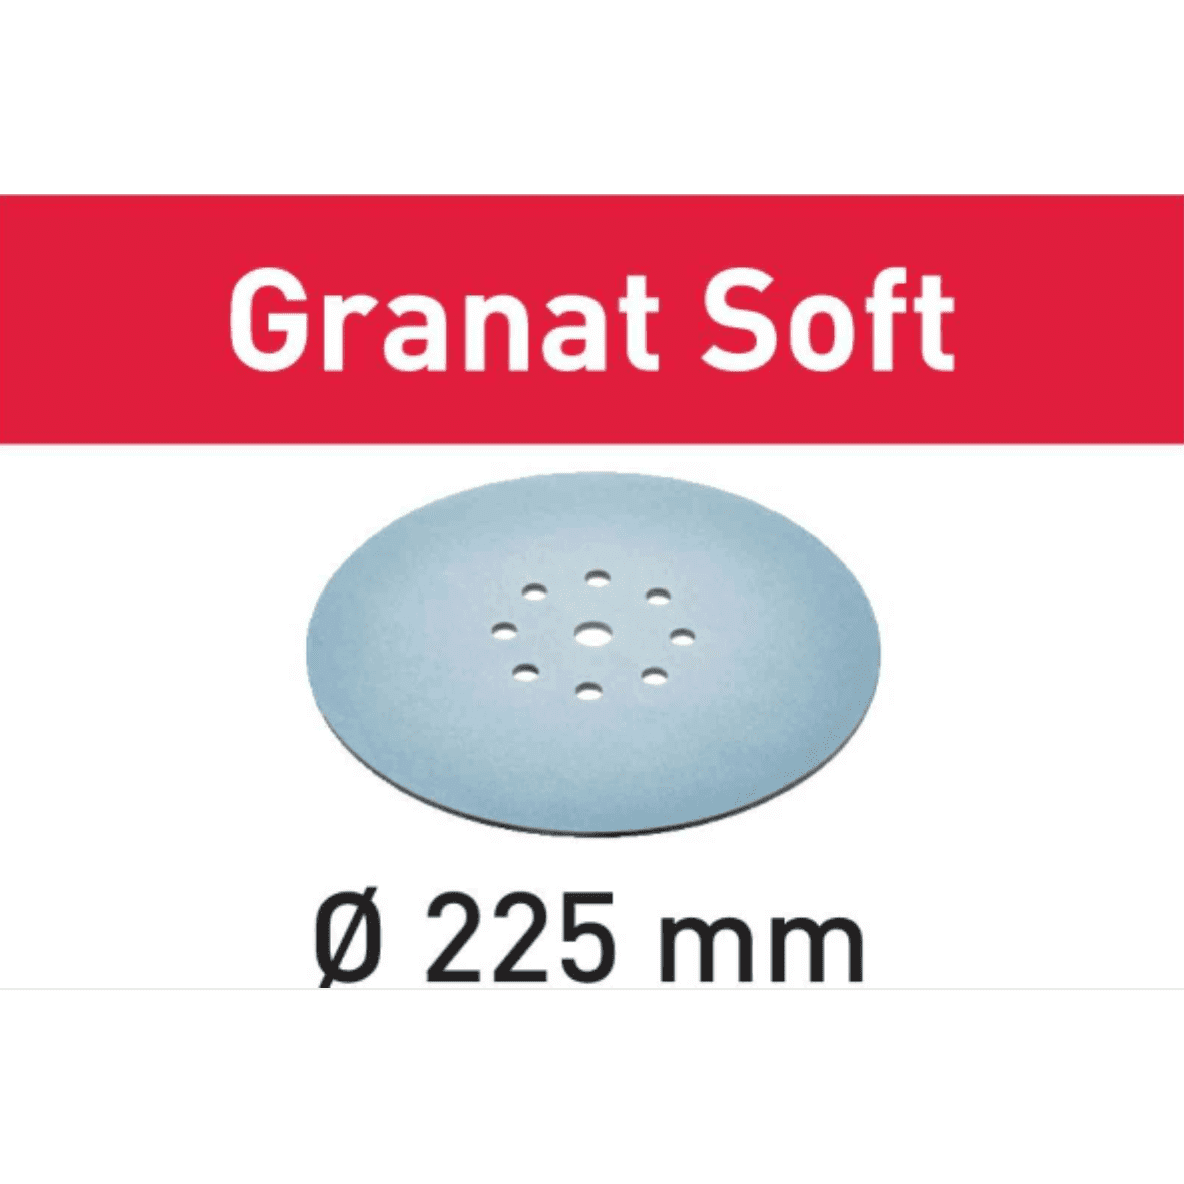 D225 Festool Granat Soft Sandpaper 25Pk